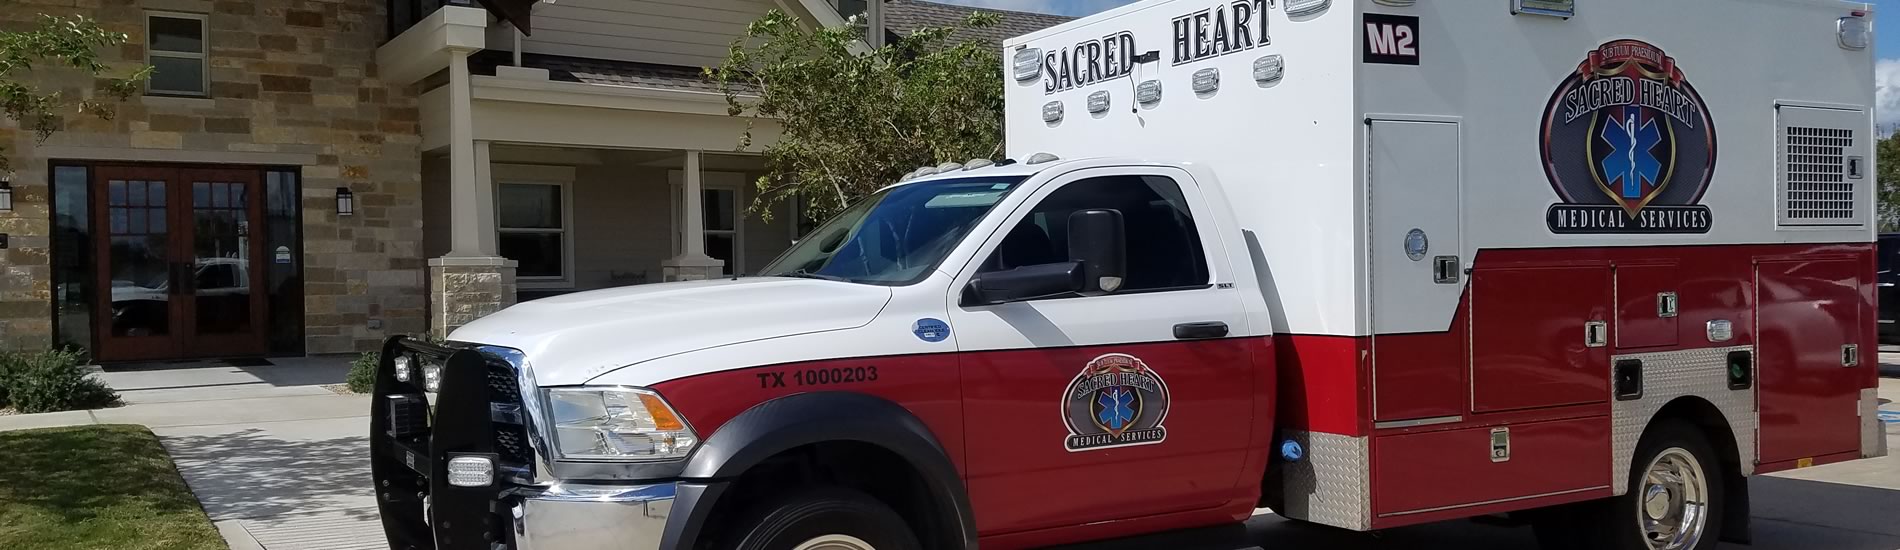 Sacred Heart Emergency Medical Service Victoria Texas